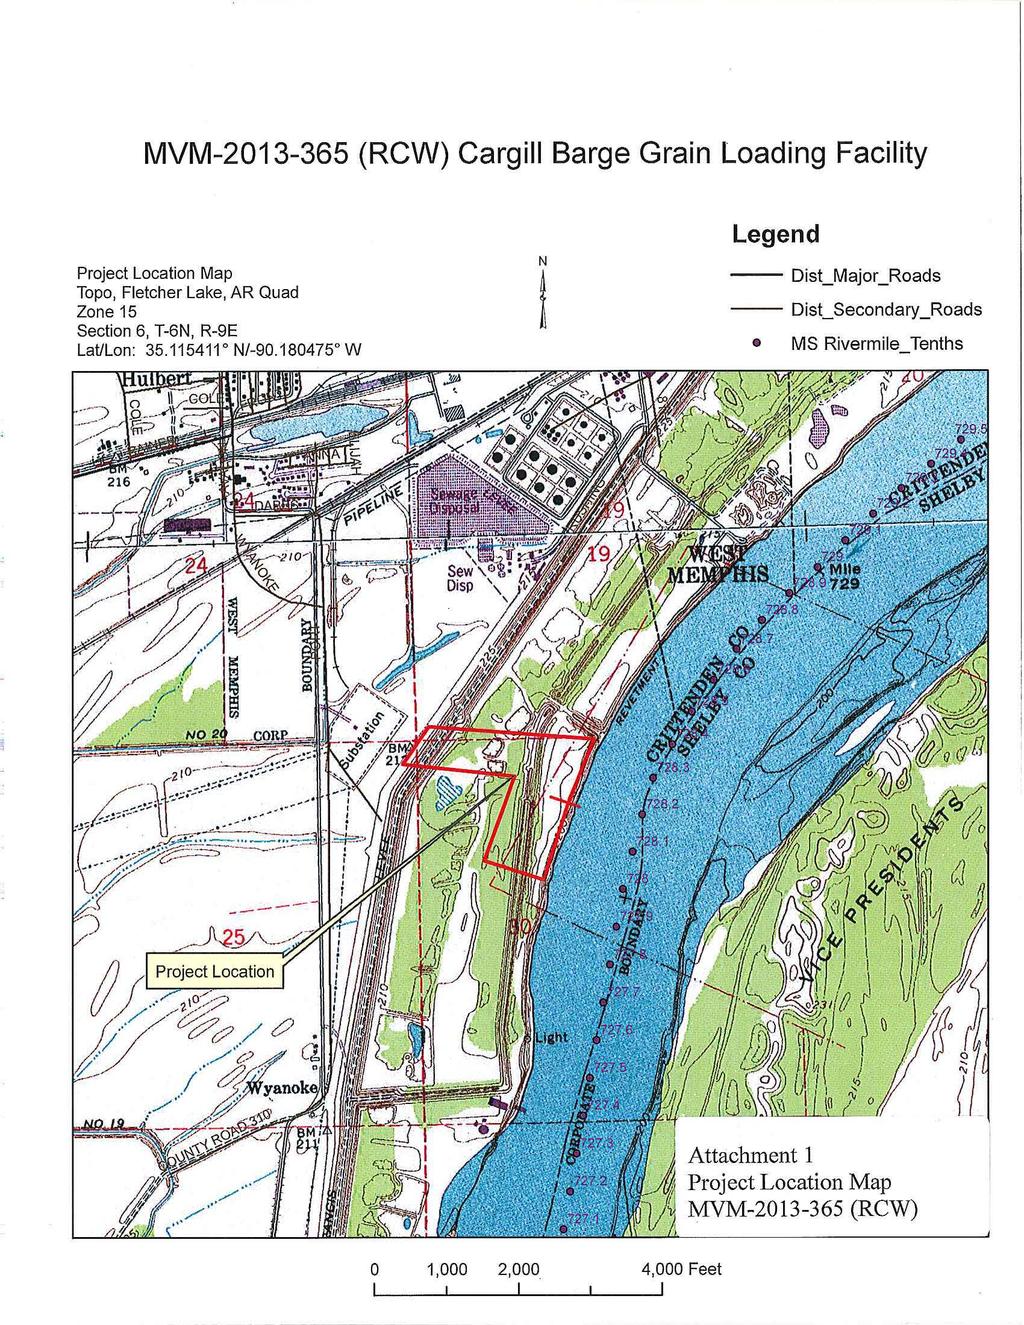 Cargill Barge Grain Loading Facility Project Location Map Topo, Fletcher Lake, AR Quad Zone 15 Section 6, T-6N, R-9E LaULon: 35.